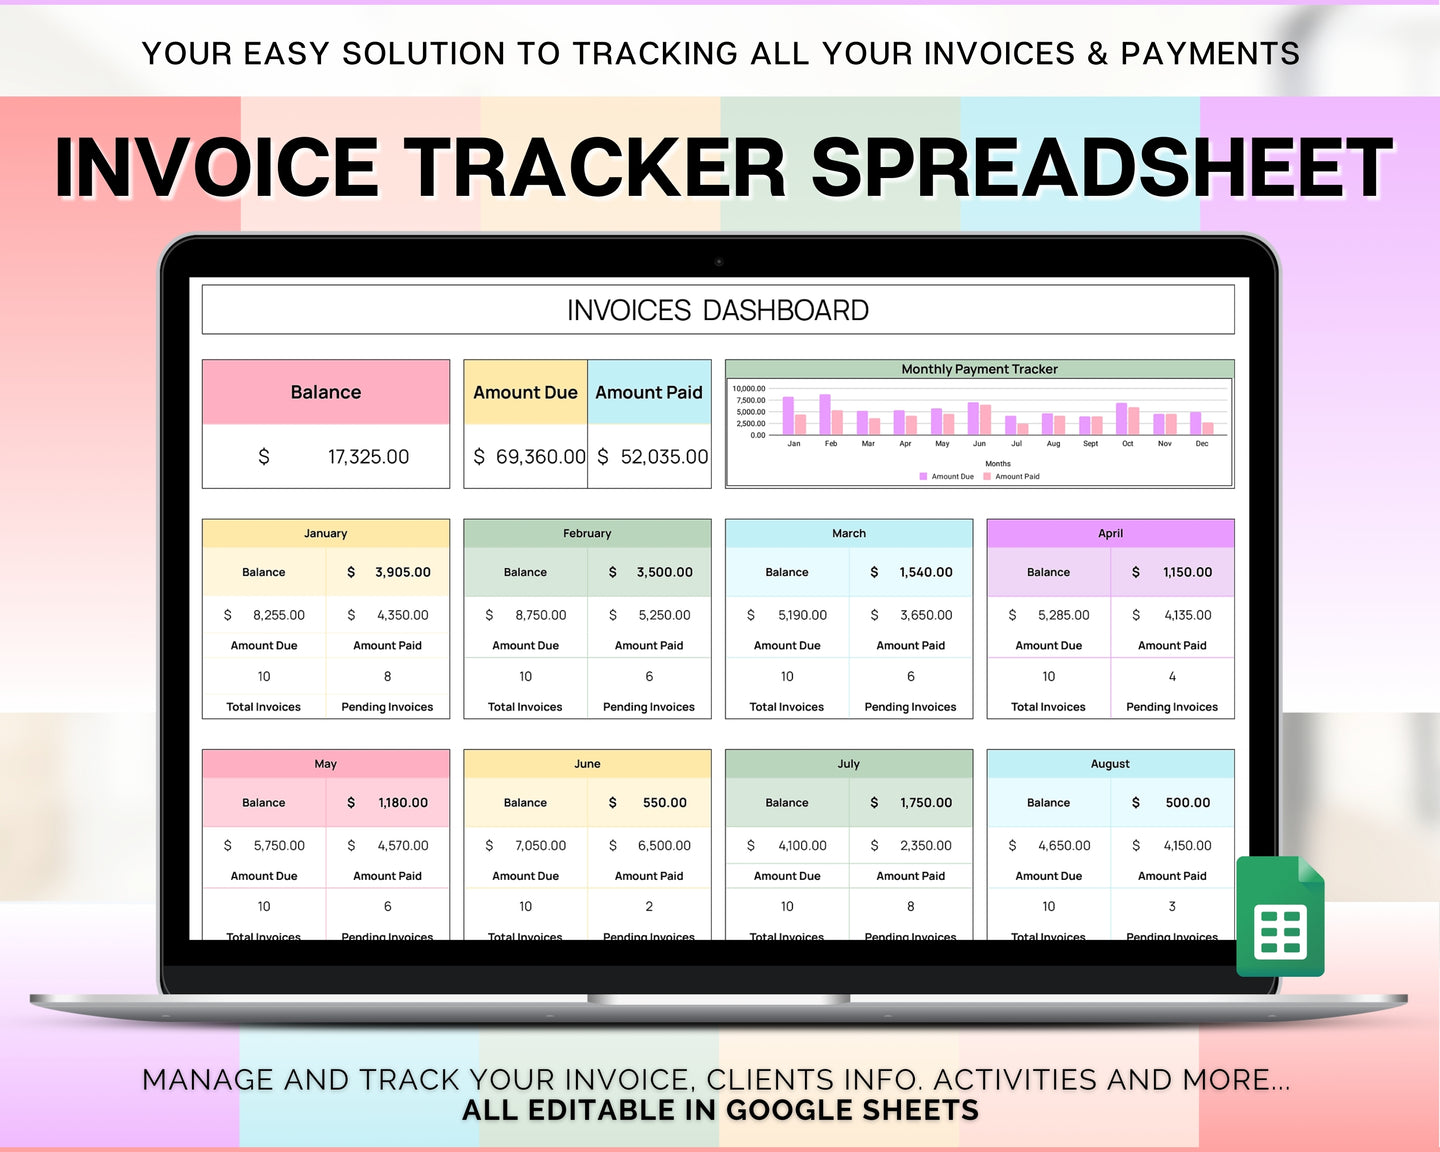 Invoice Tracker Spreadsheet | Small Business Invoice Tracking With Invoice Template, Task Tracker, Order Profit Loss & Google Sheets Sales Tracker